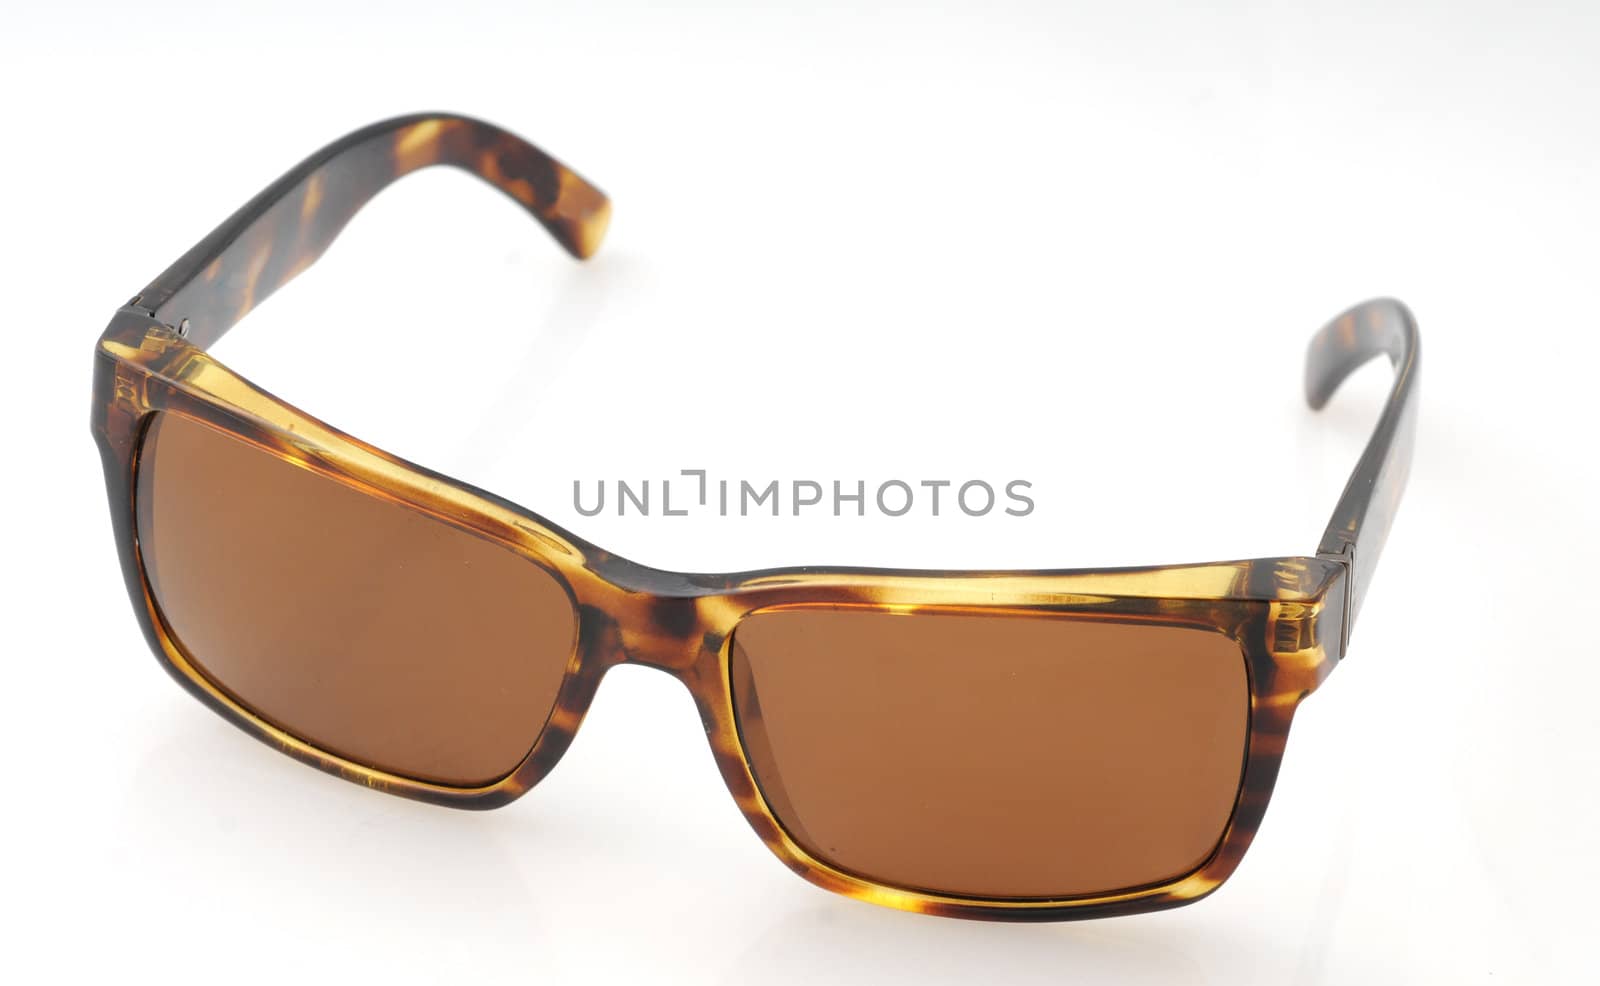 Brown sunglasses by ftlaudgirl